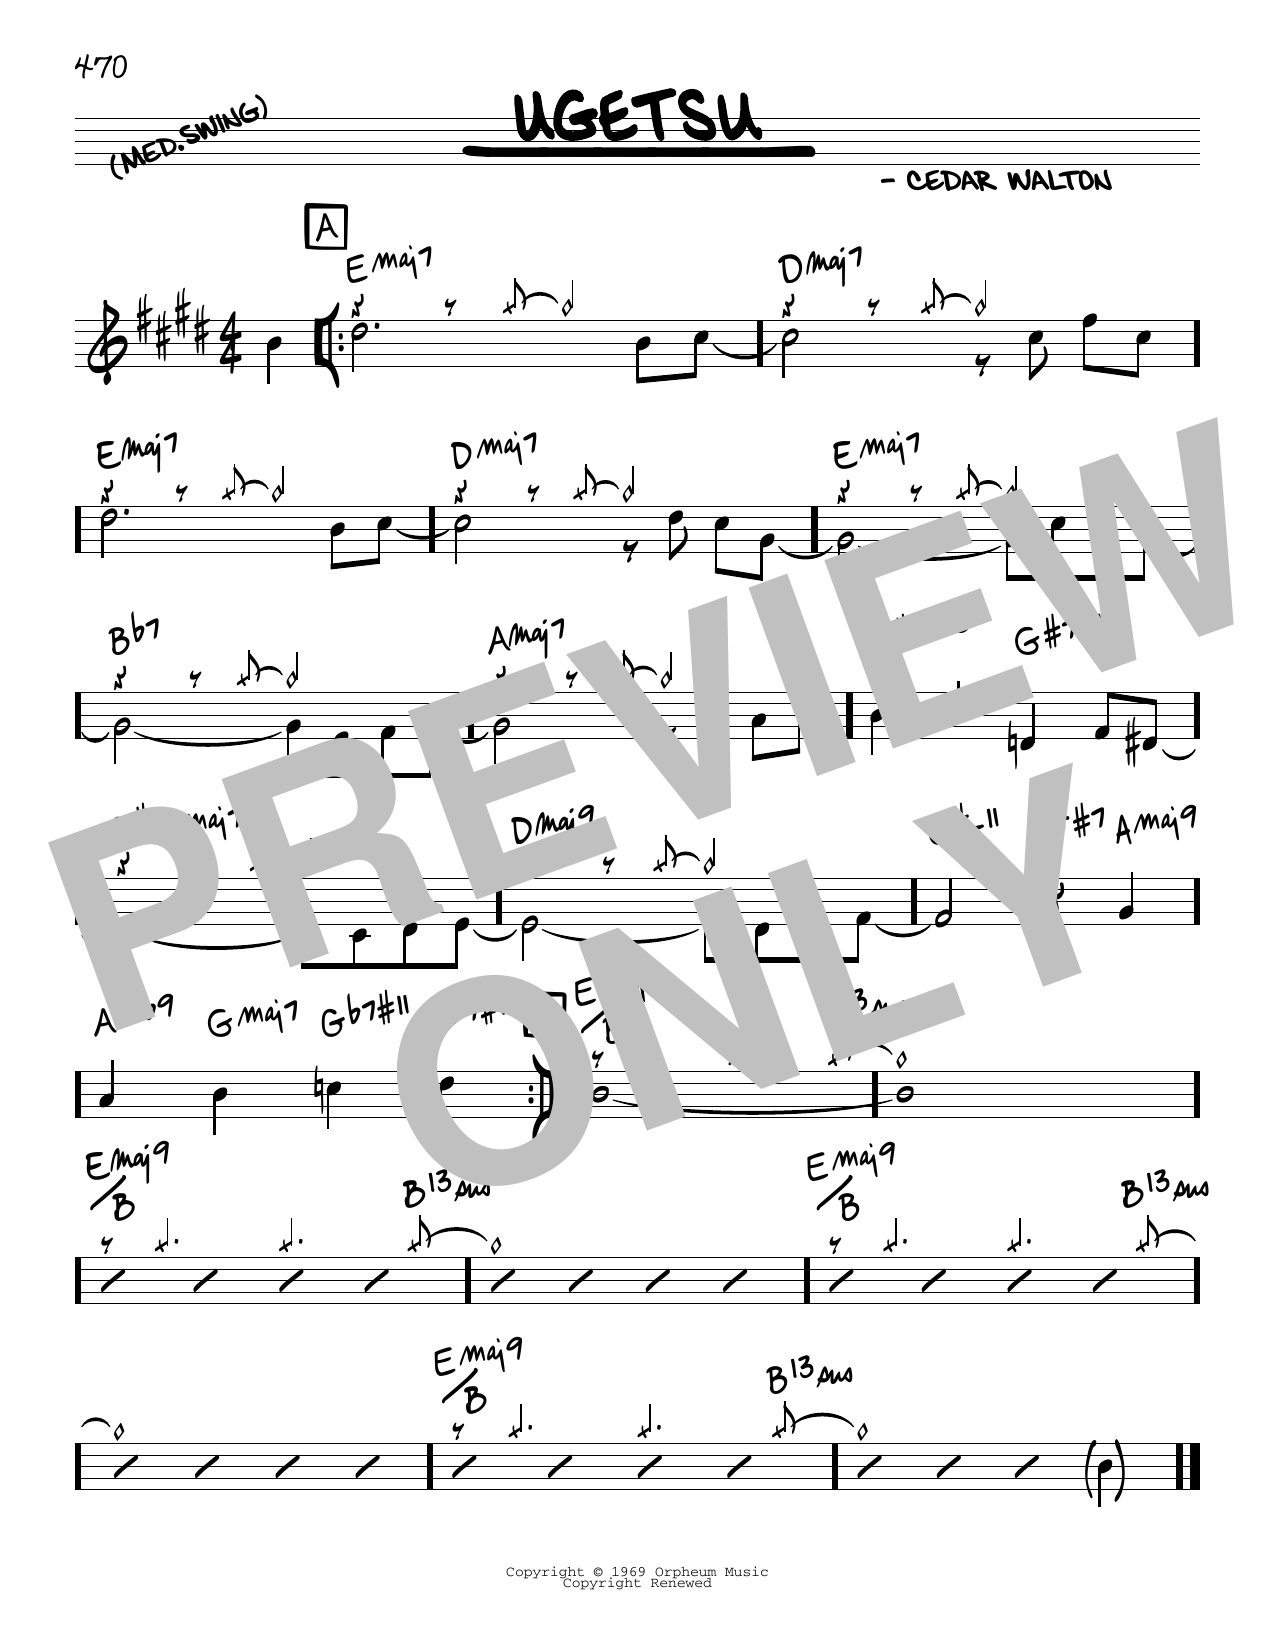 Cedar Walton Ugetsu Sheet Music Notes & Chords for Real Book – Melody & Chords - Download or Print PDF